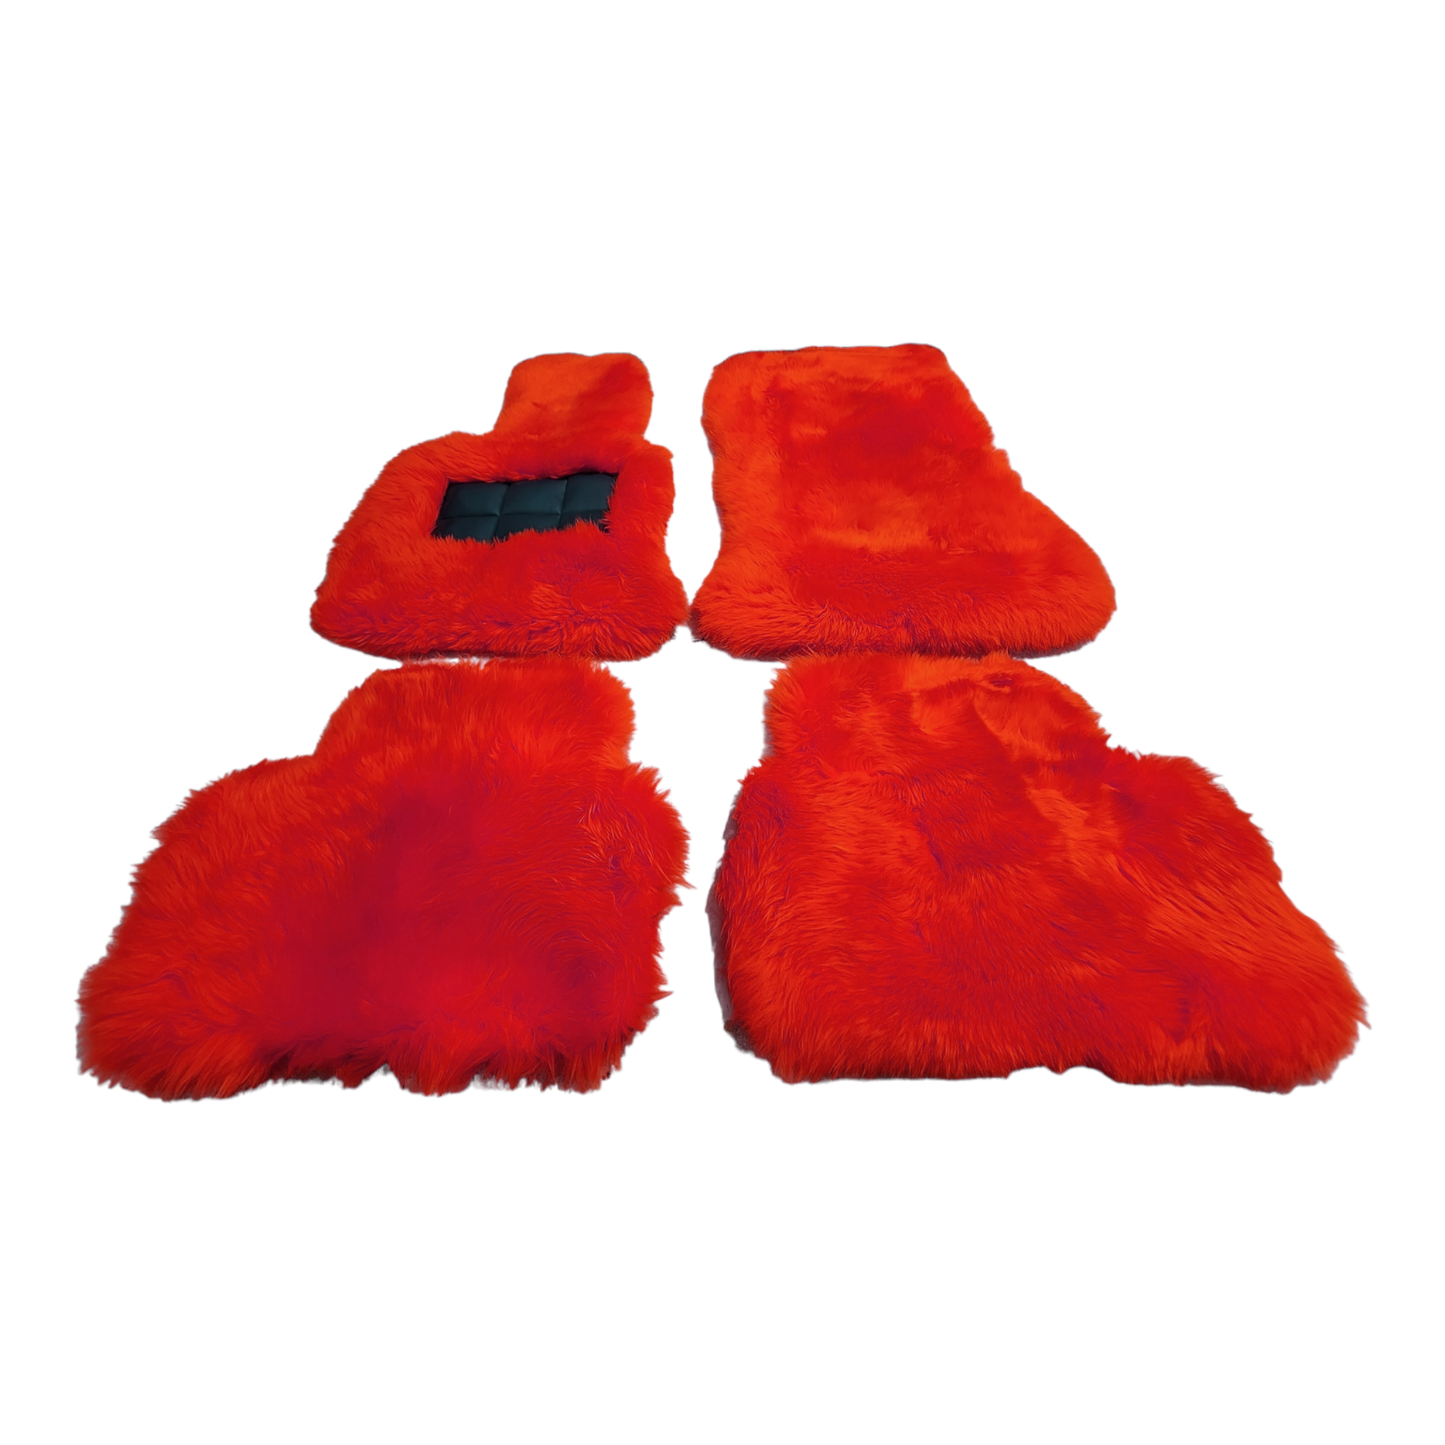 Mogul Mats Genuine Sheepskin Floor Mats Shown in Bright Red